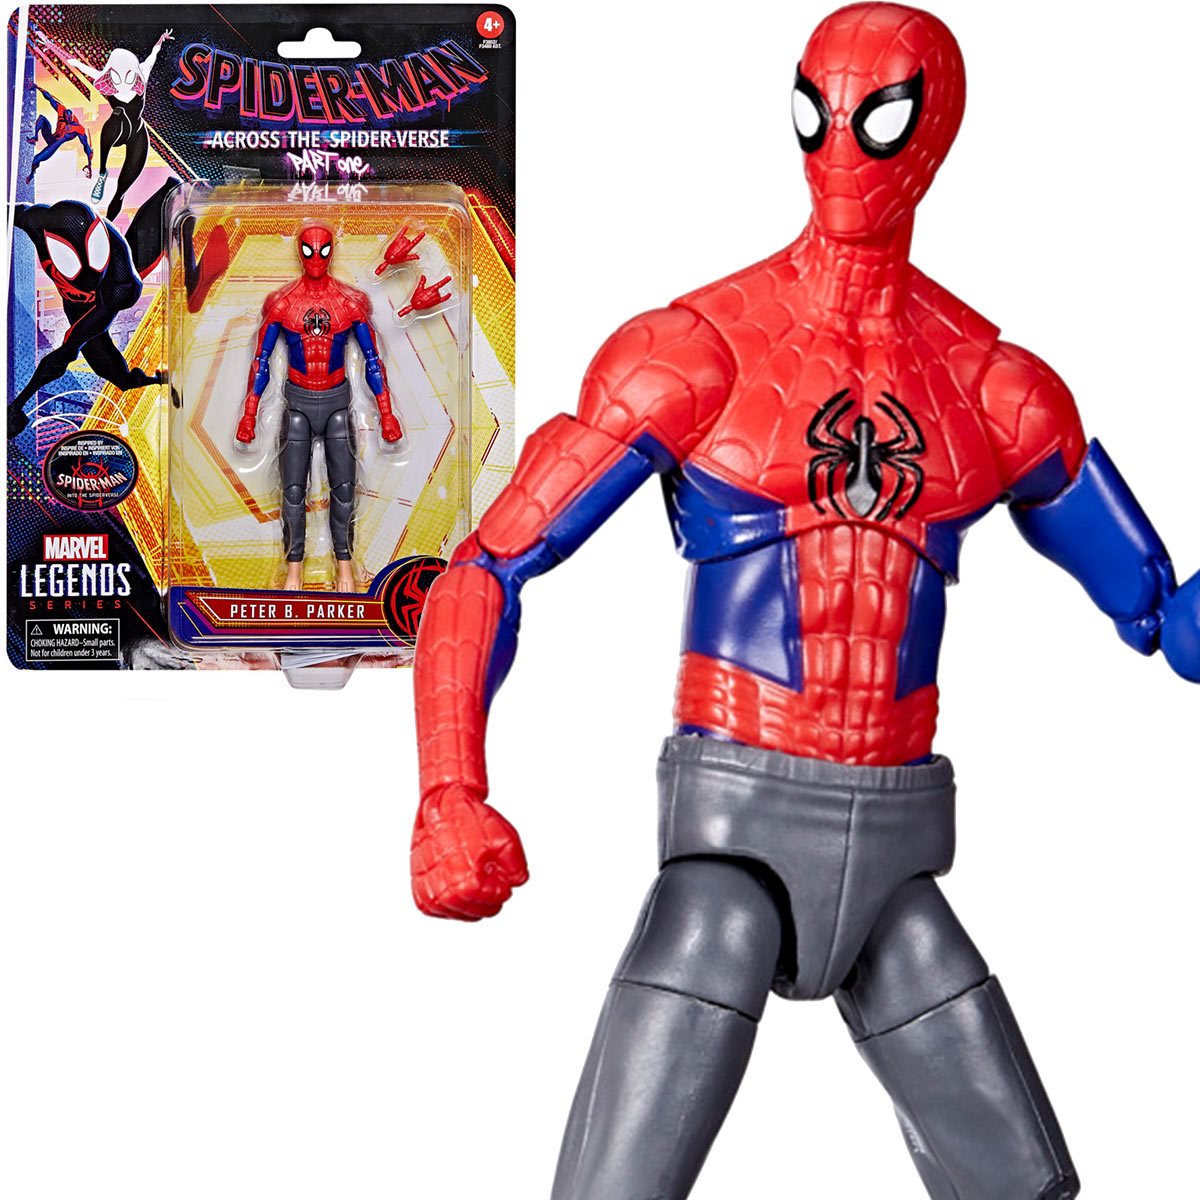 Spider-Man Across The Spider-Verse Marvel Legends Peter Parker 6-Inch Action Figure